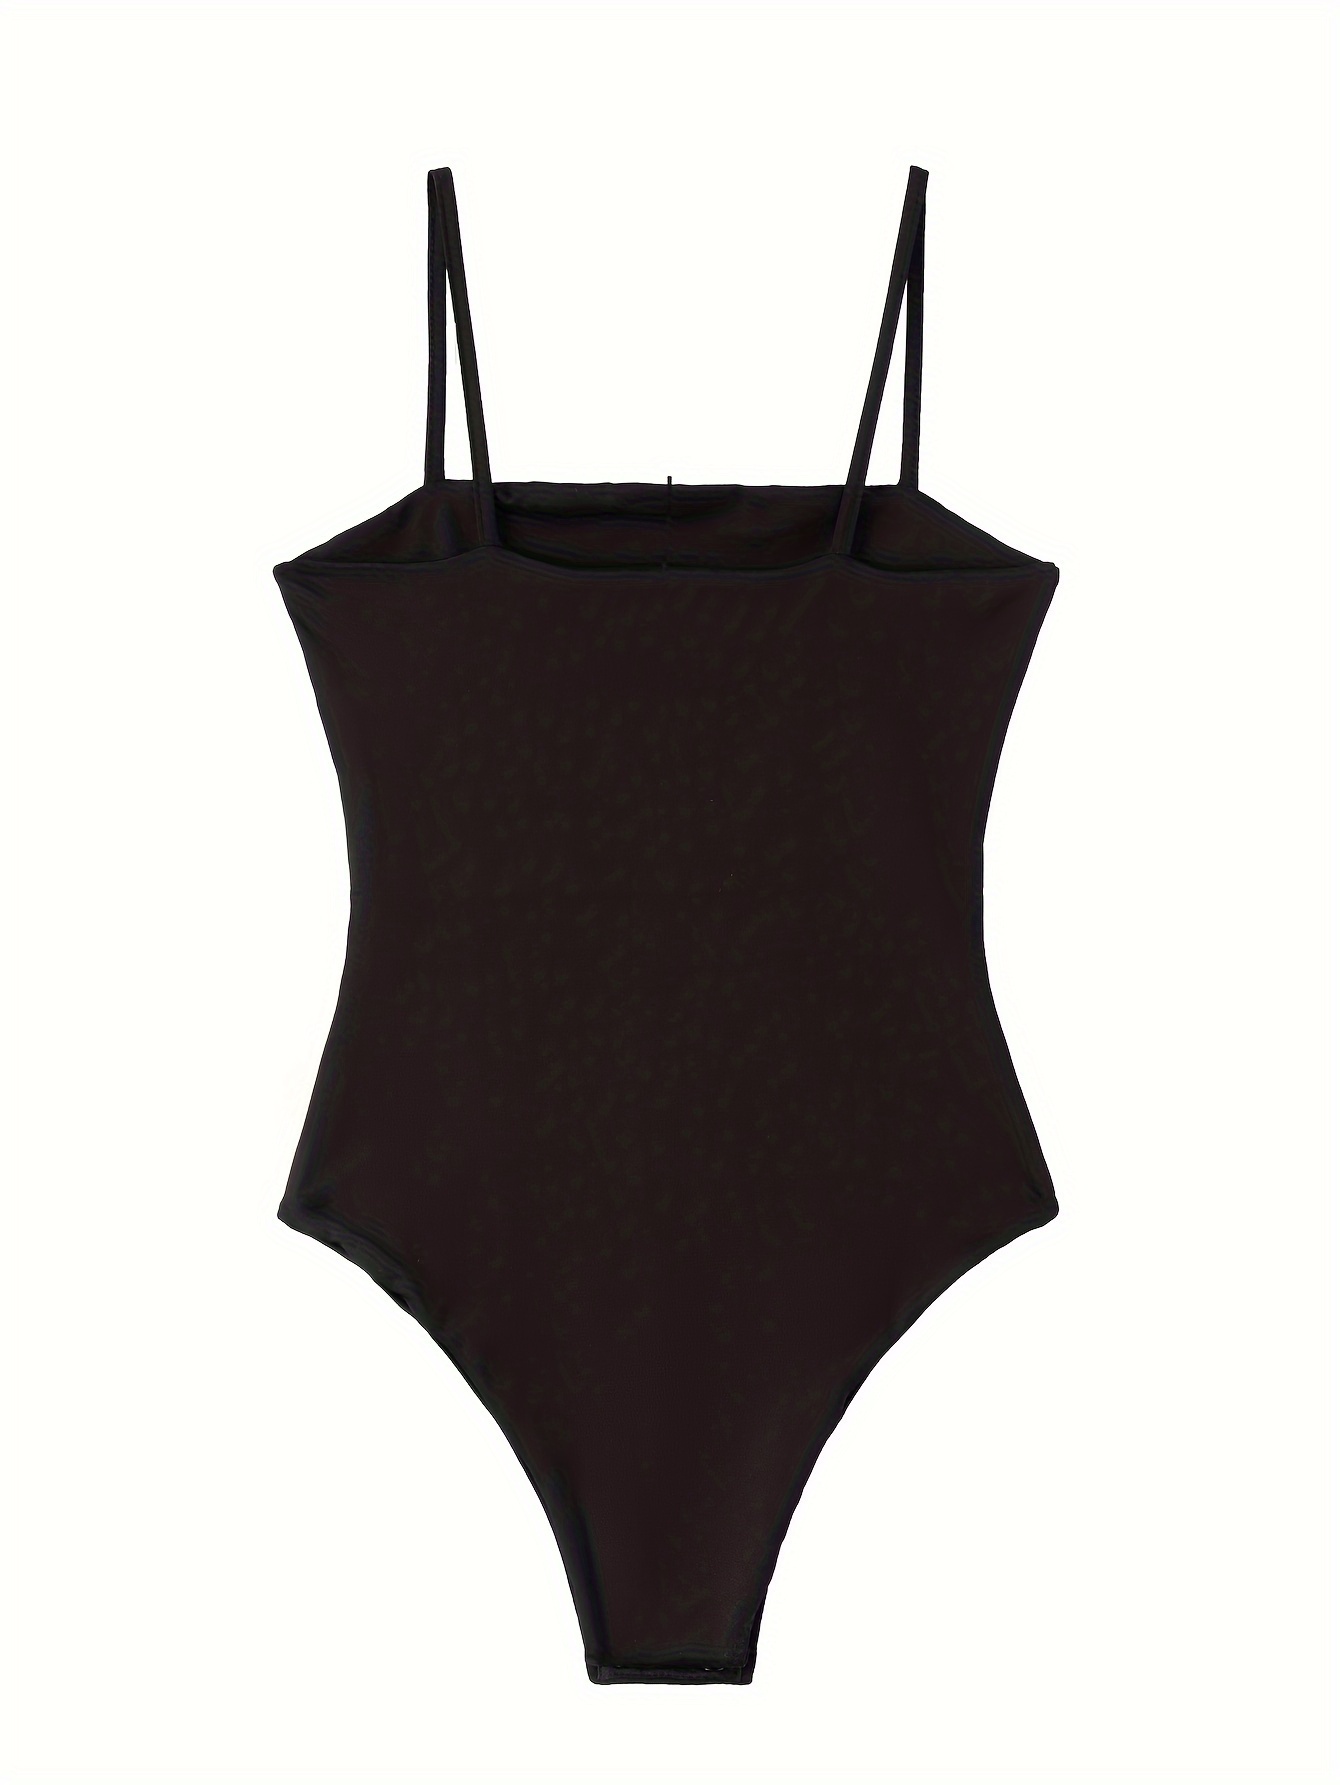 Strappy Backless Bodysuit Women Black Sleeveless Summer Beach Hot Bodysuits  Scoop Neck Cross Slim Cami Bodysuit From Makaylashop, $31.66